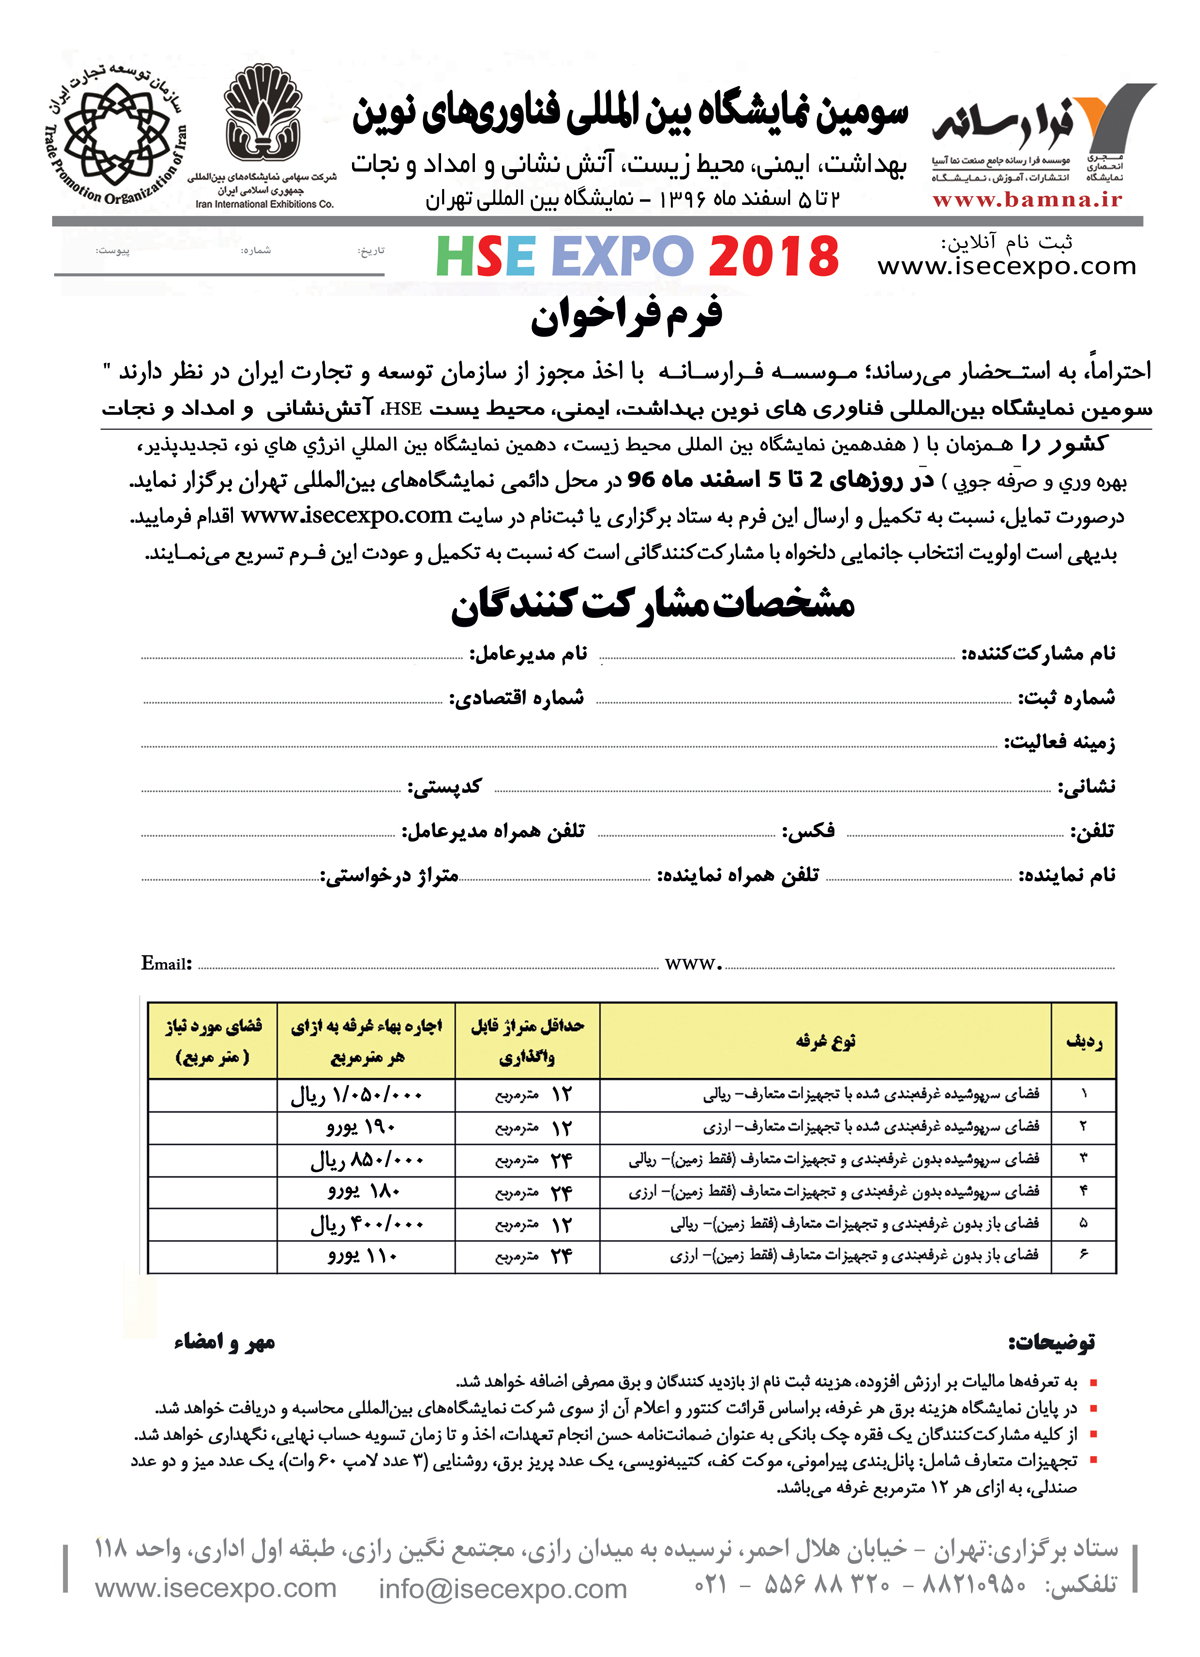 HSEexpo-2016-Registration-Form1